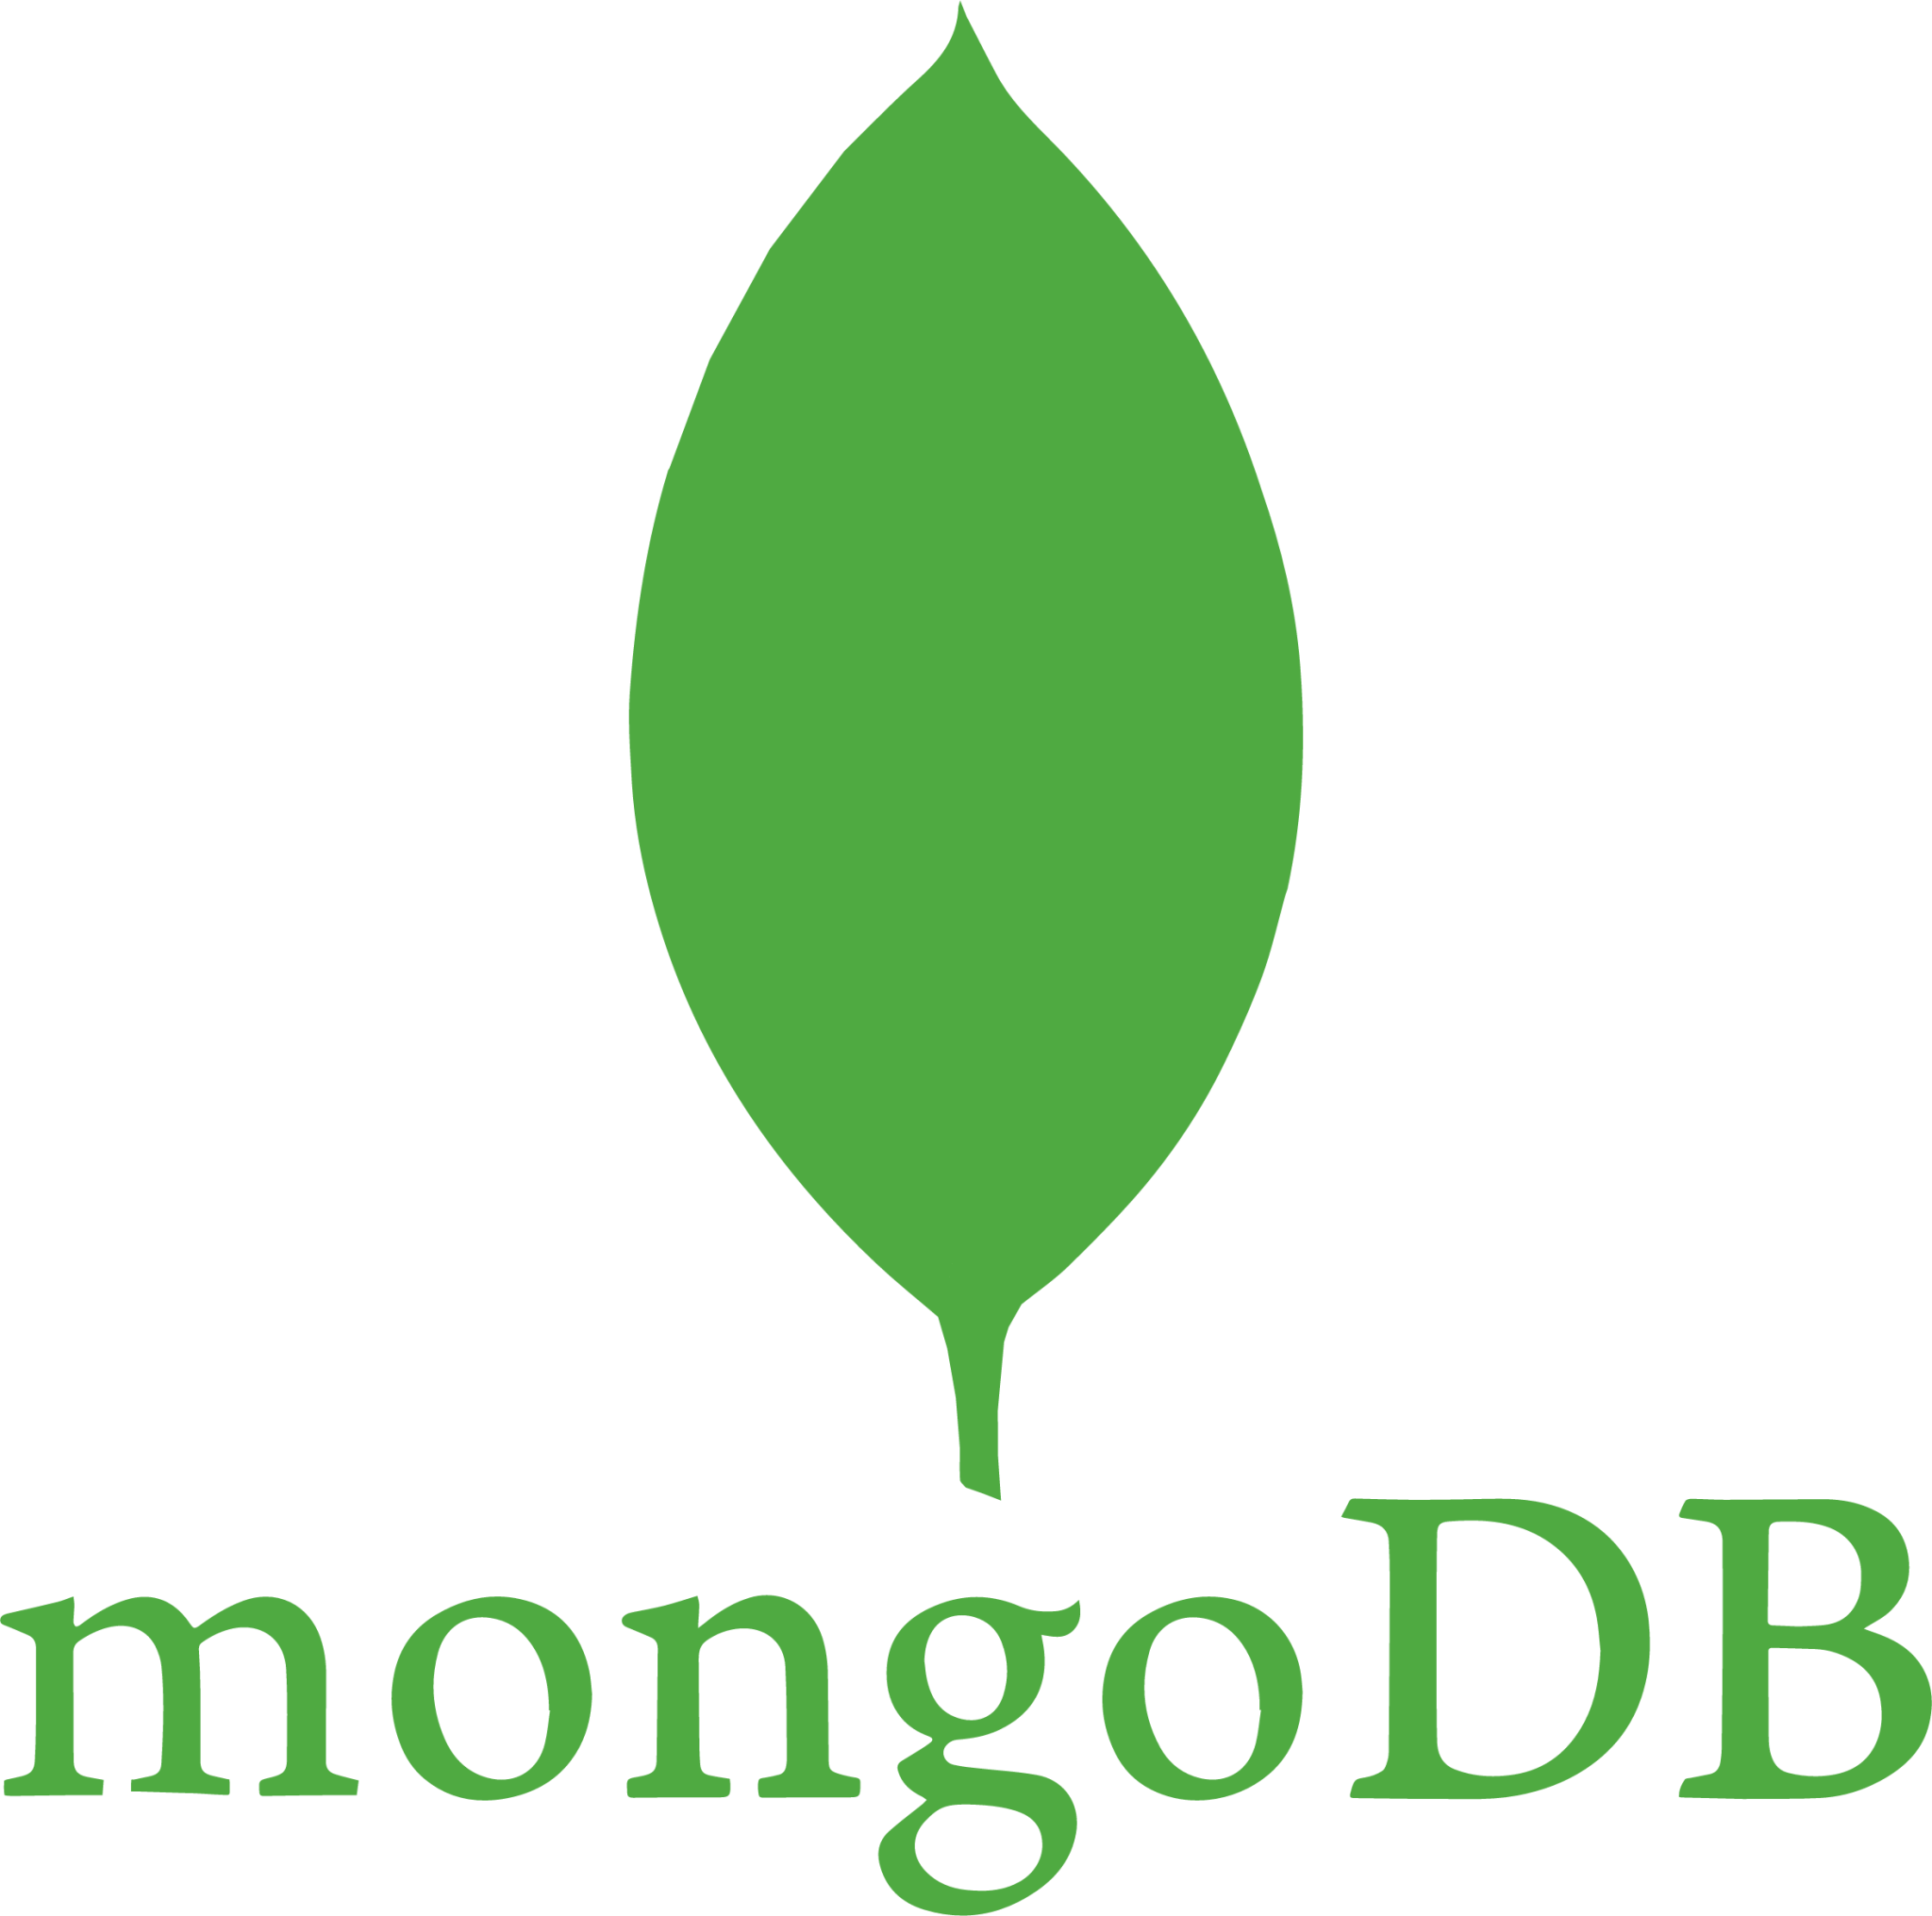 mongodb plain wordmark icon